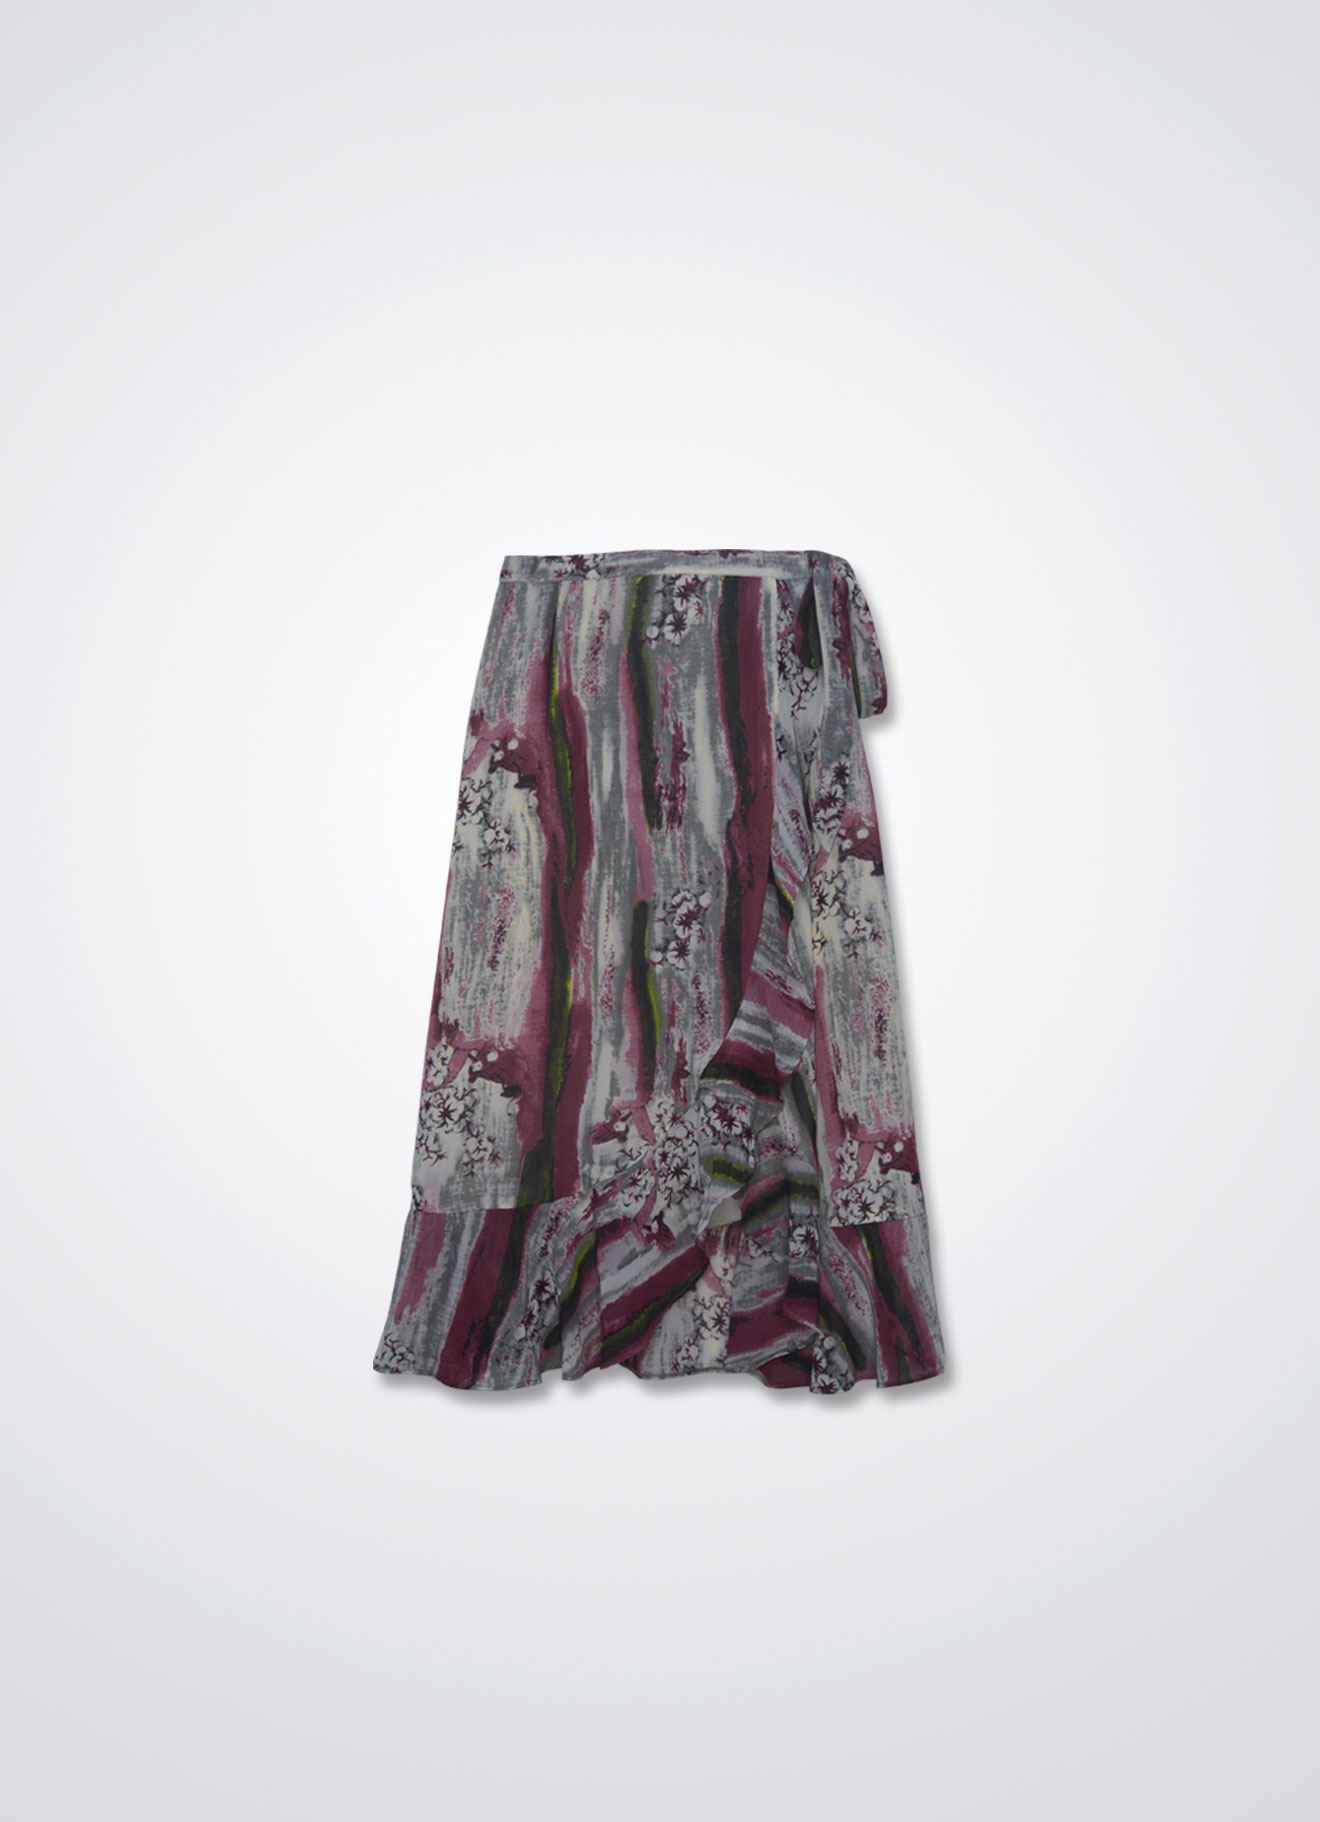 Malaga by Pleated Skirt